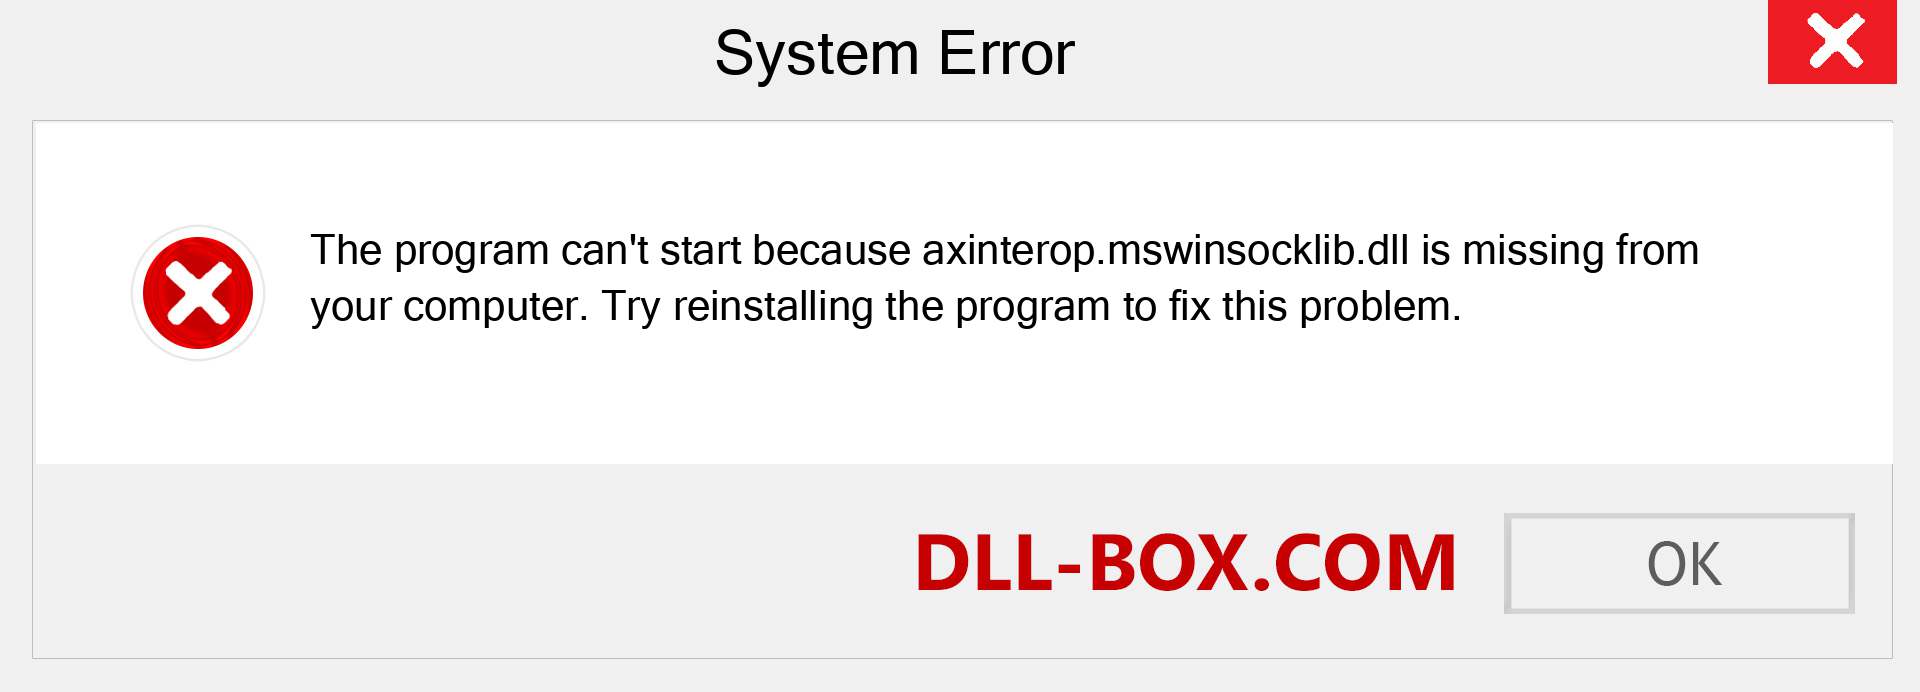  axinterop.mswinsocklib.dll file is missing?. Download for Windows 7, 8, 10 - Fix  axinterop.mswinsocklib dll Missing Error on Windows, photos, images